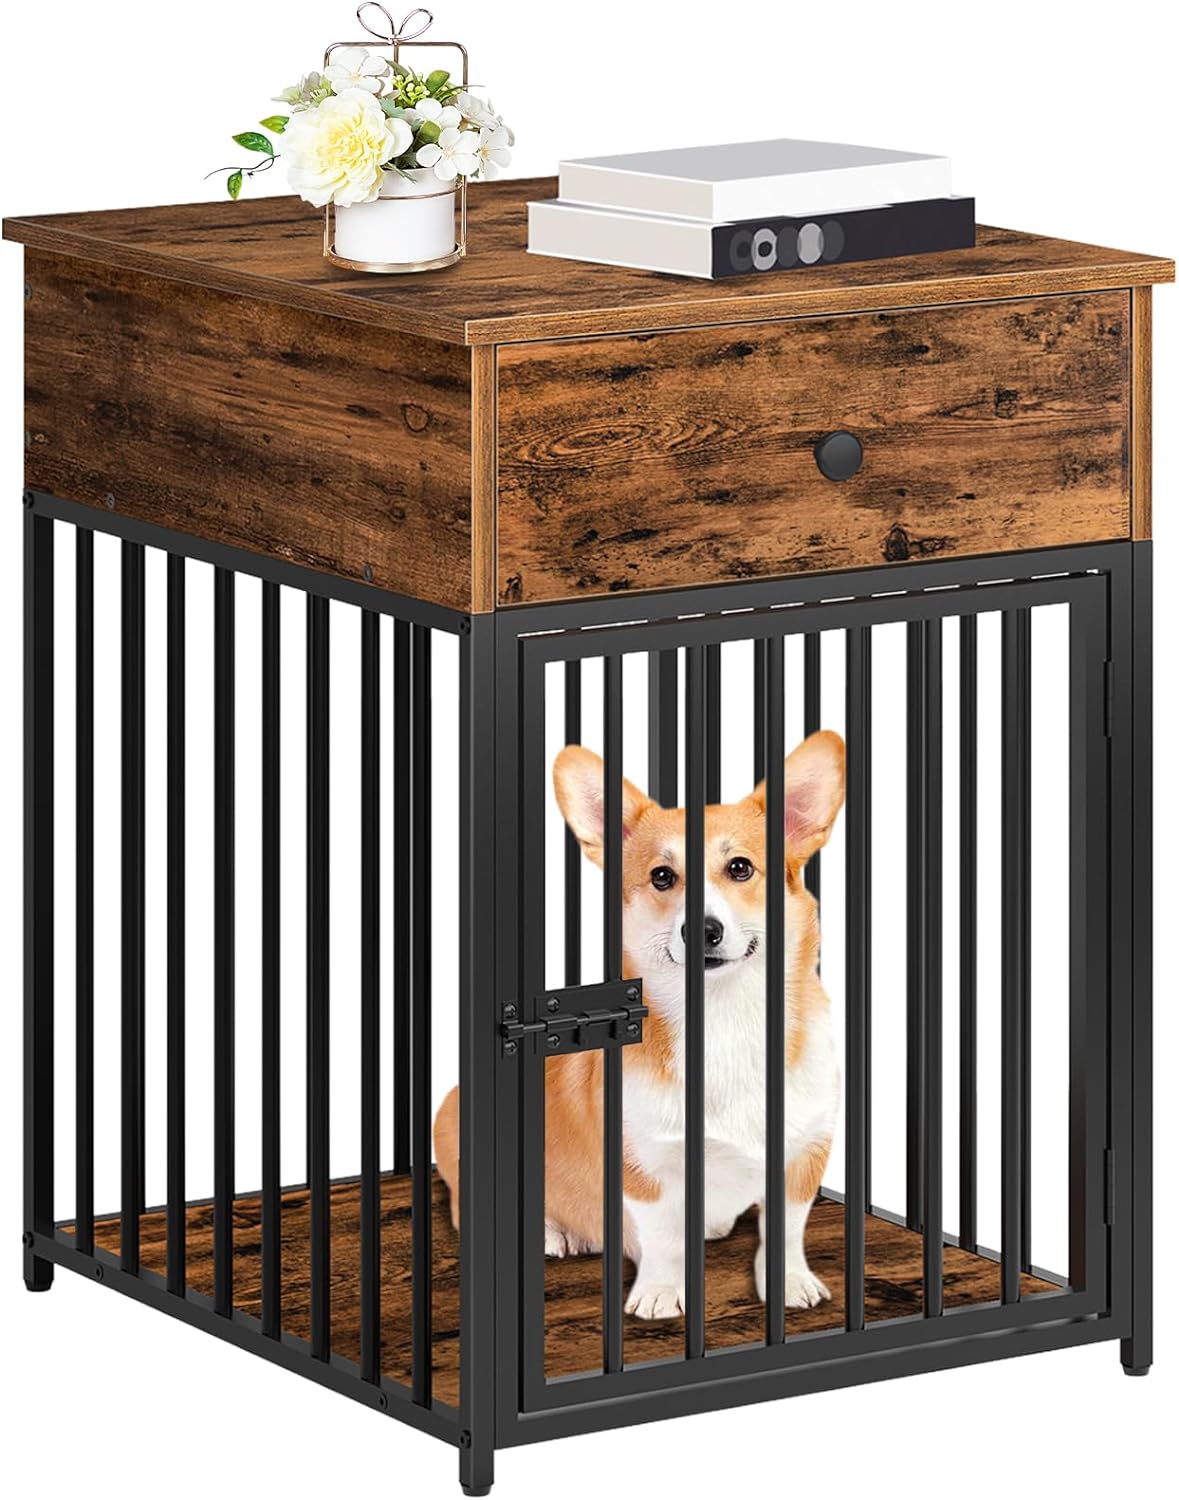 HOOBRO Dog Crate Furniture